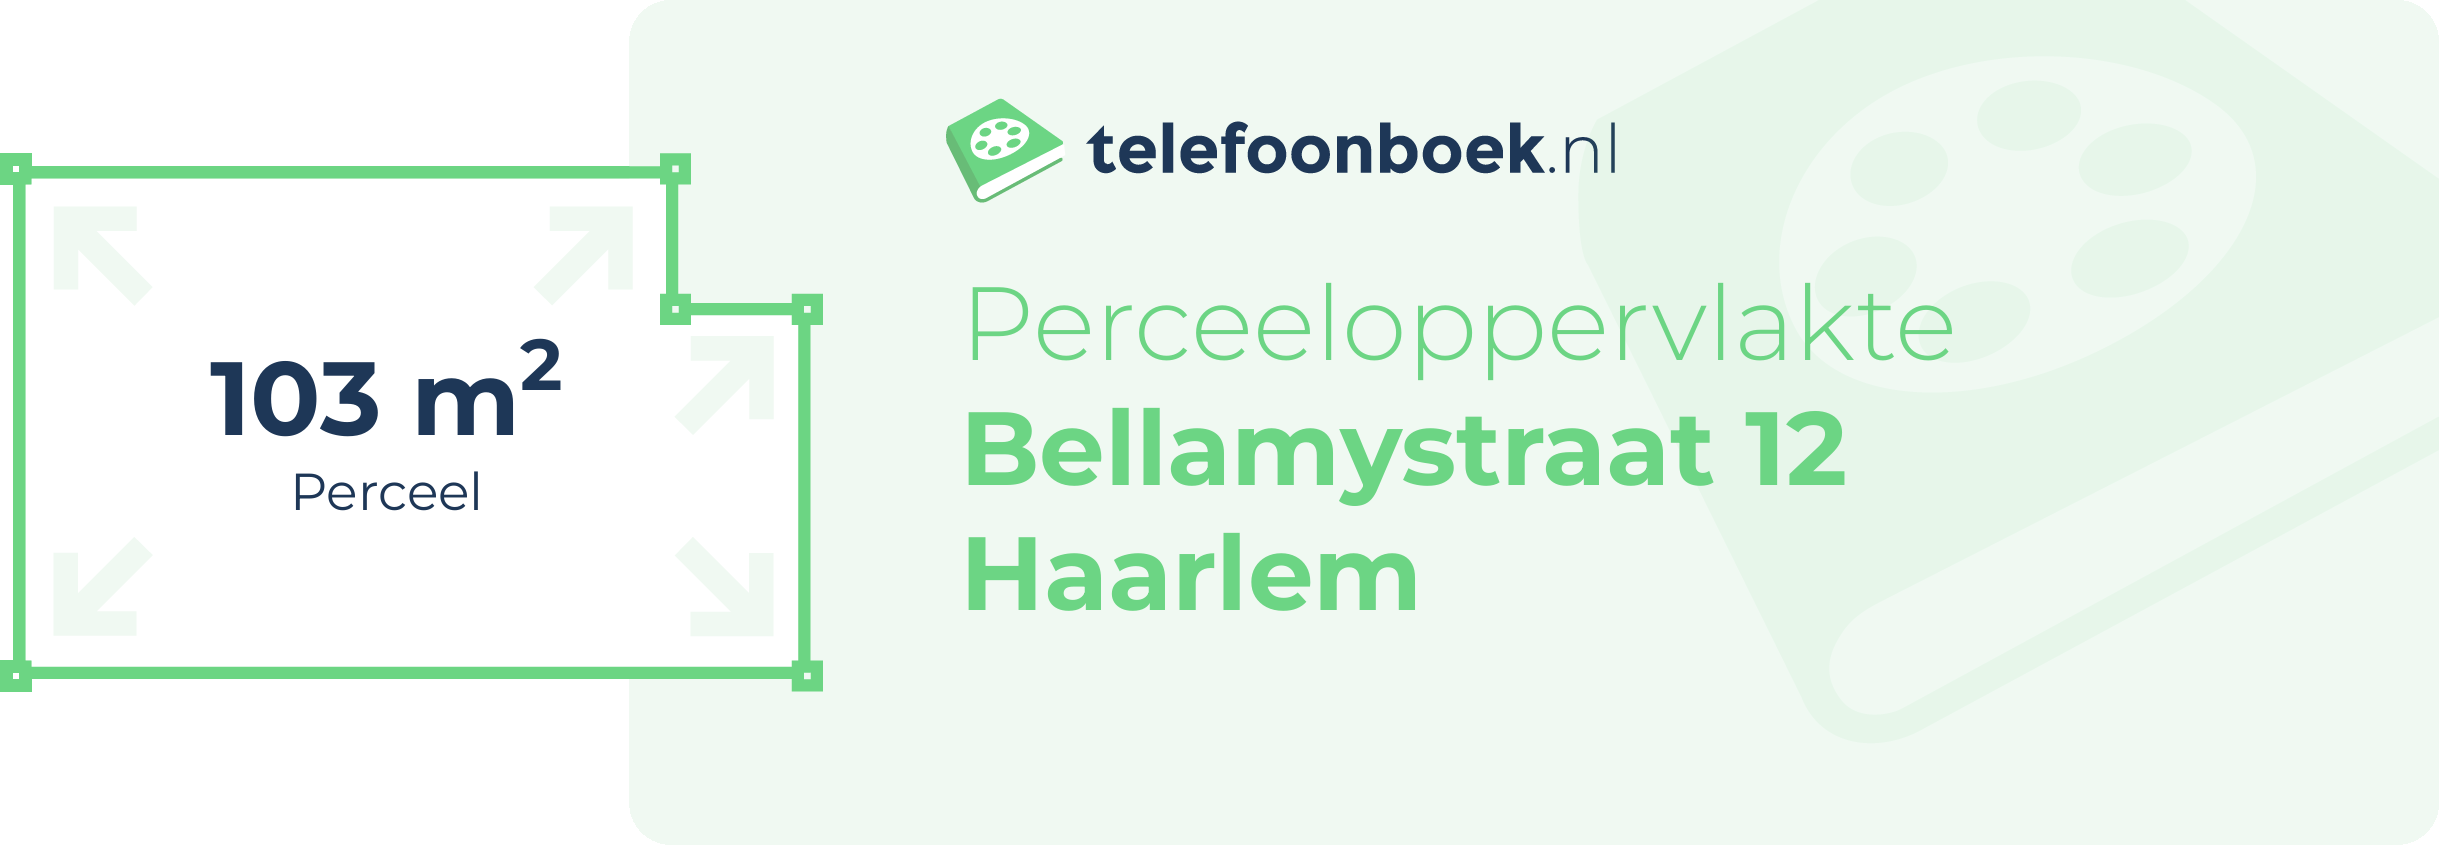 Perceeloppervlakte Bellamystraat 12 Haarlem